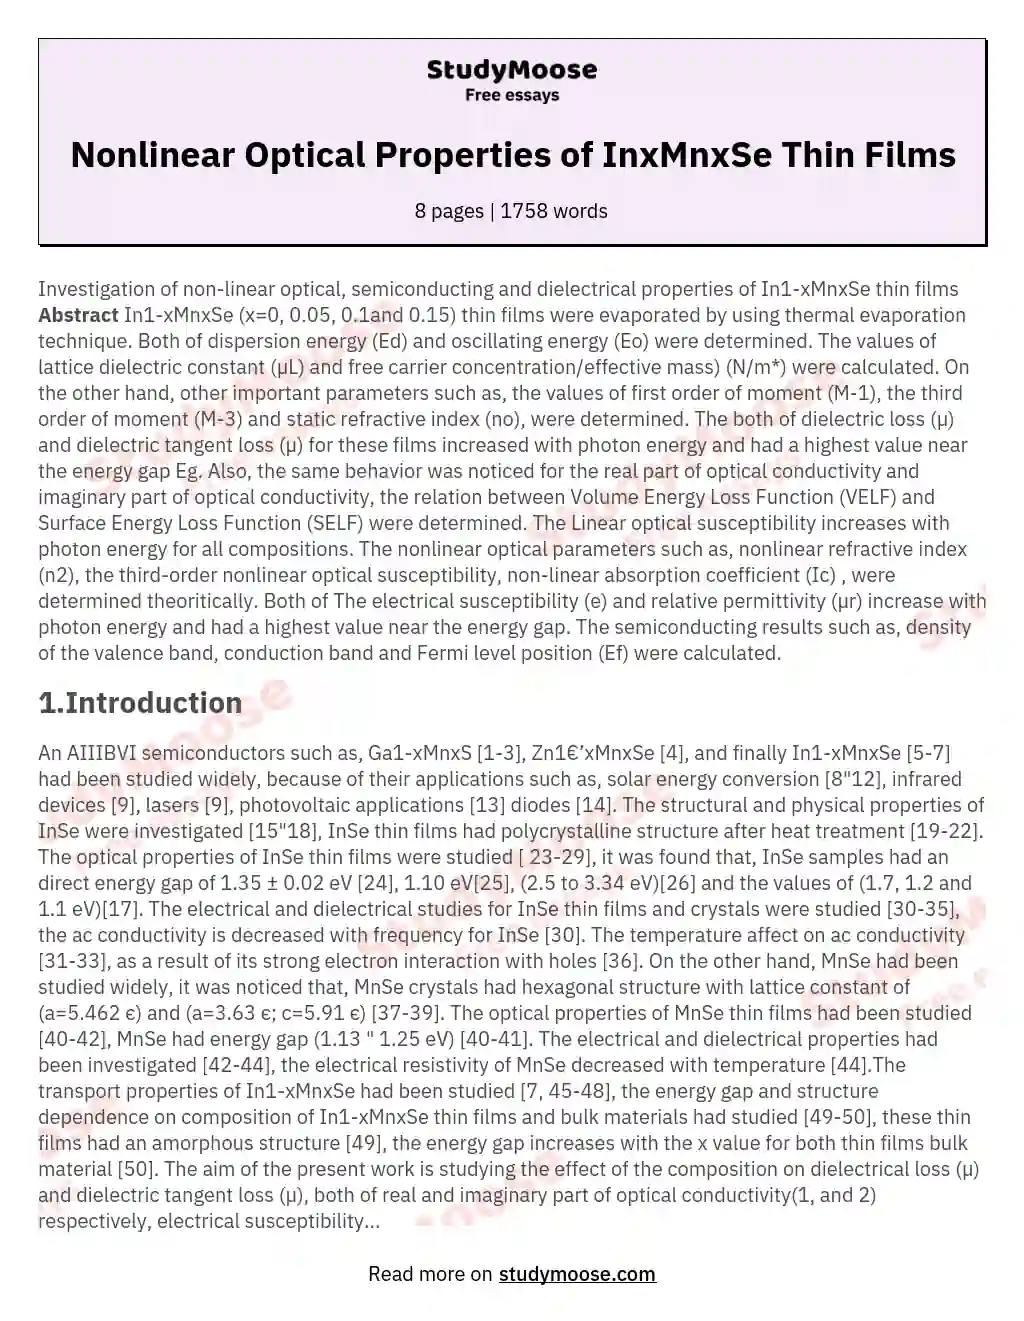 Nonlinear Optical Properties of InxMnxSe Thin Films essay